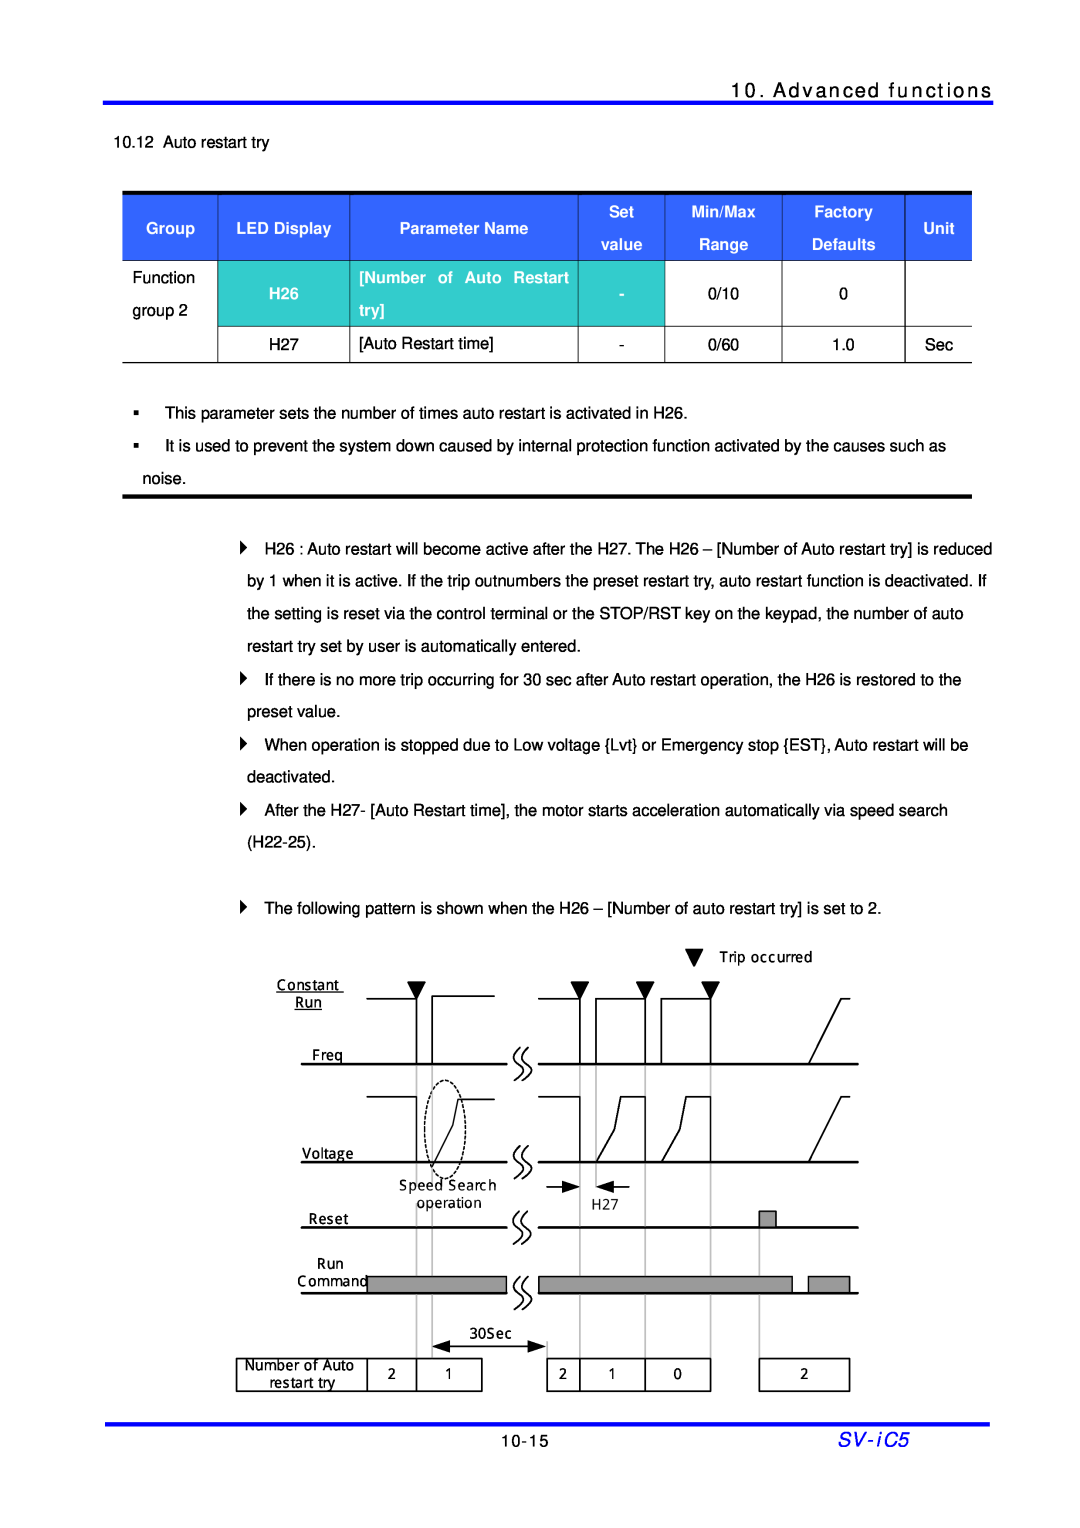 LG Electronics SV-iC5 Series manual Advanced functions, Auto restart try 